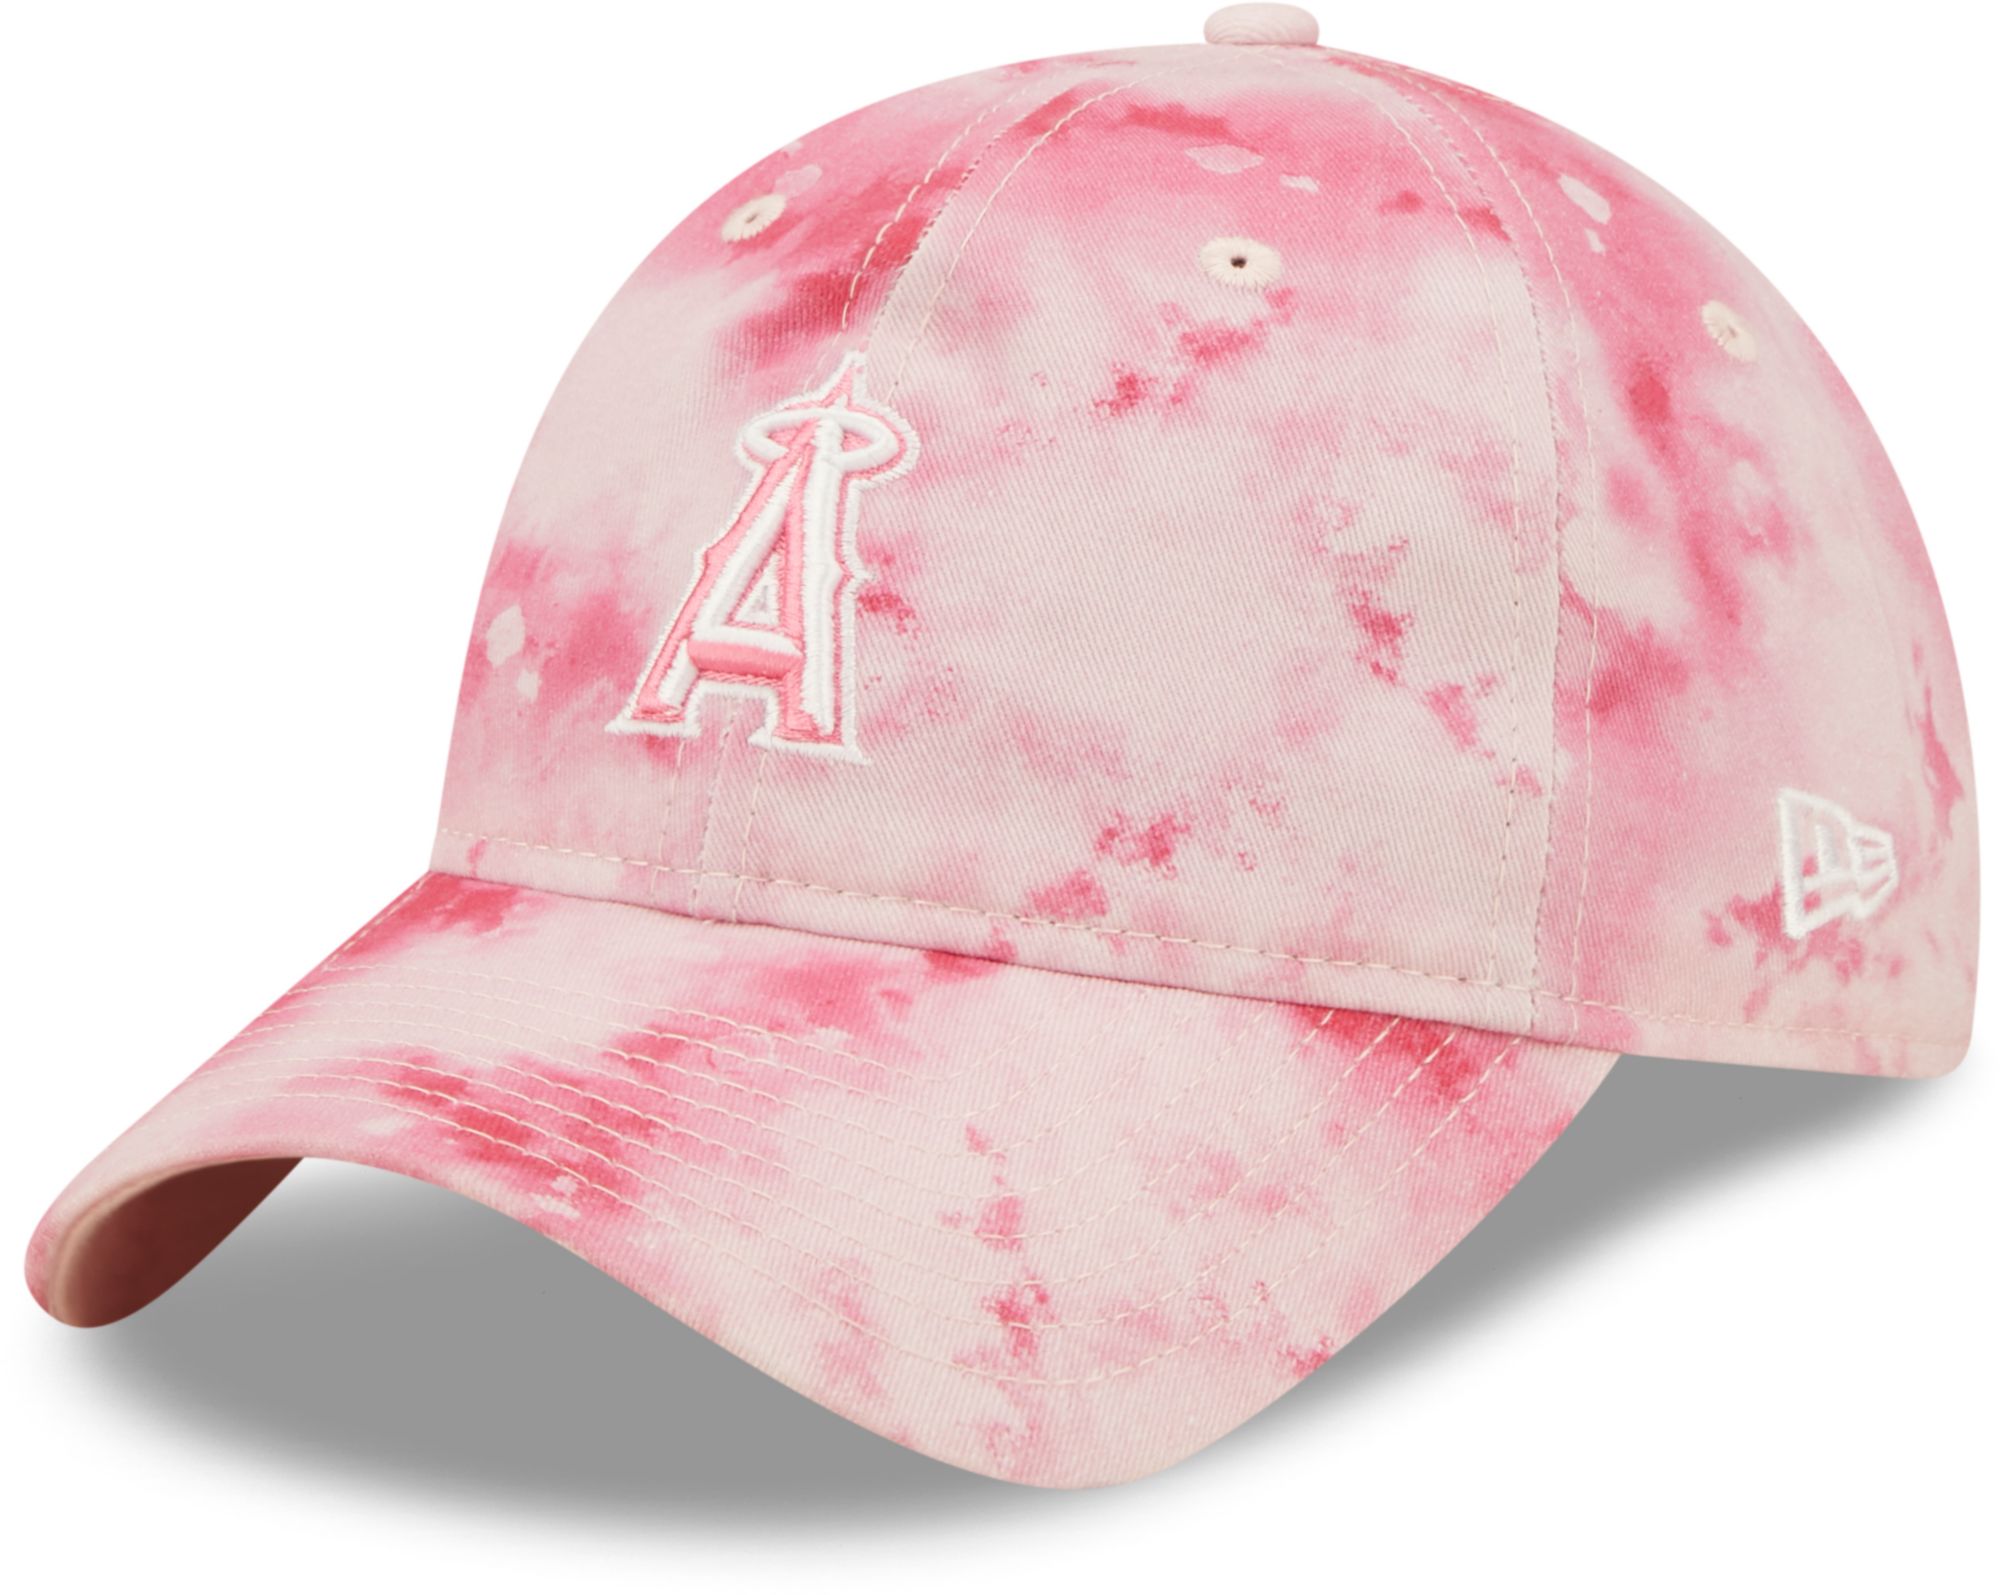 pink angels hat